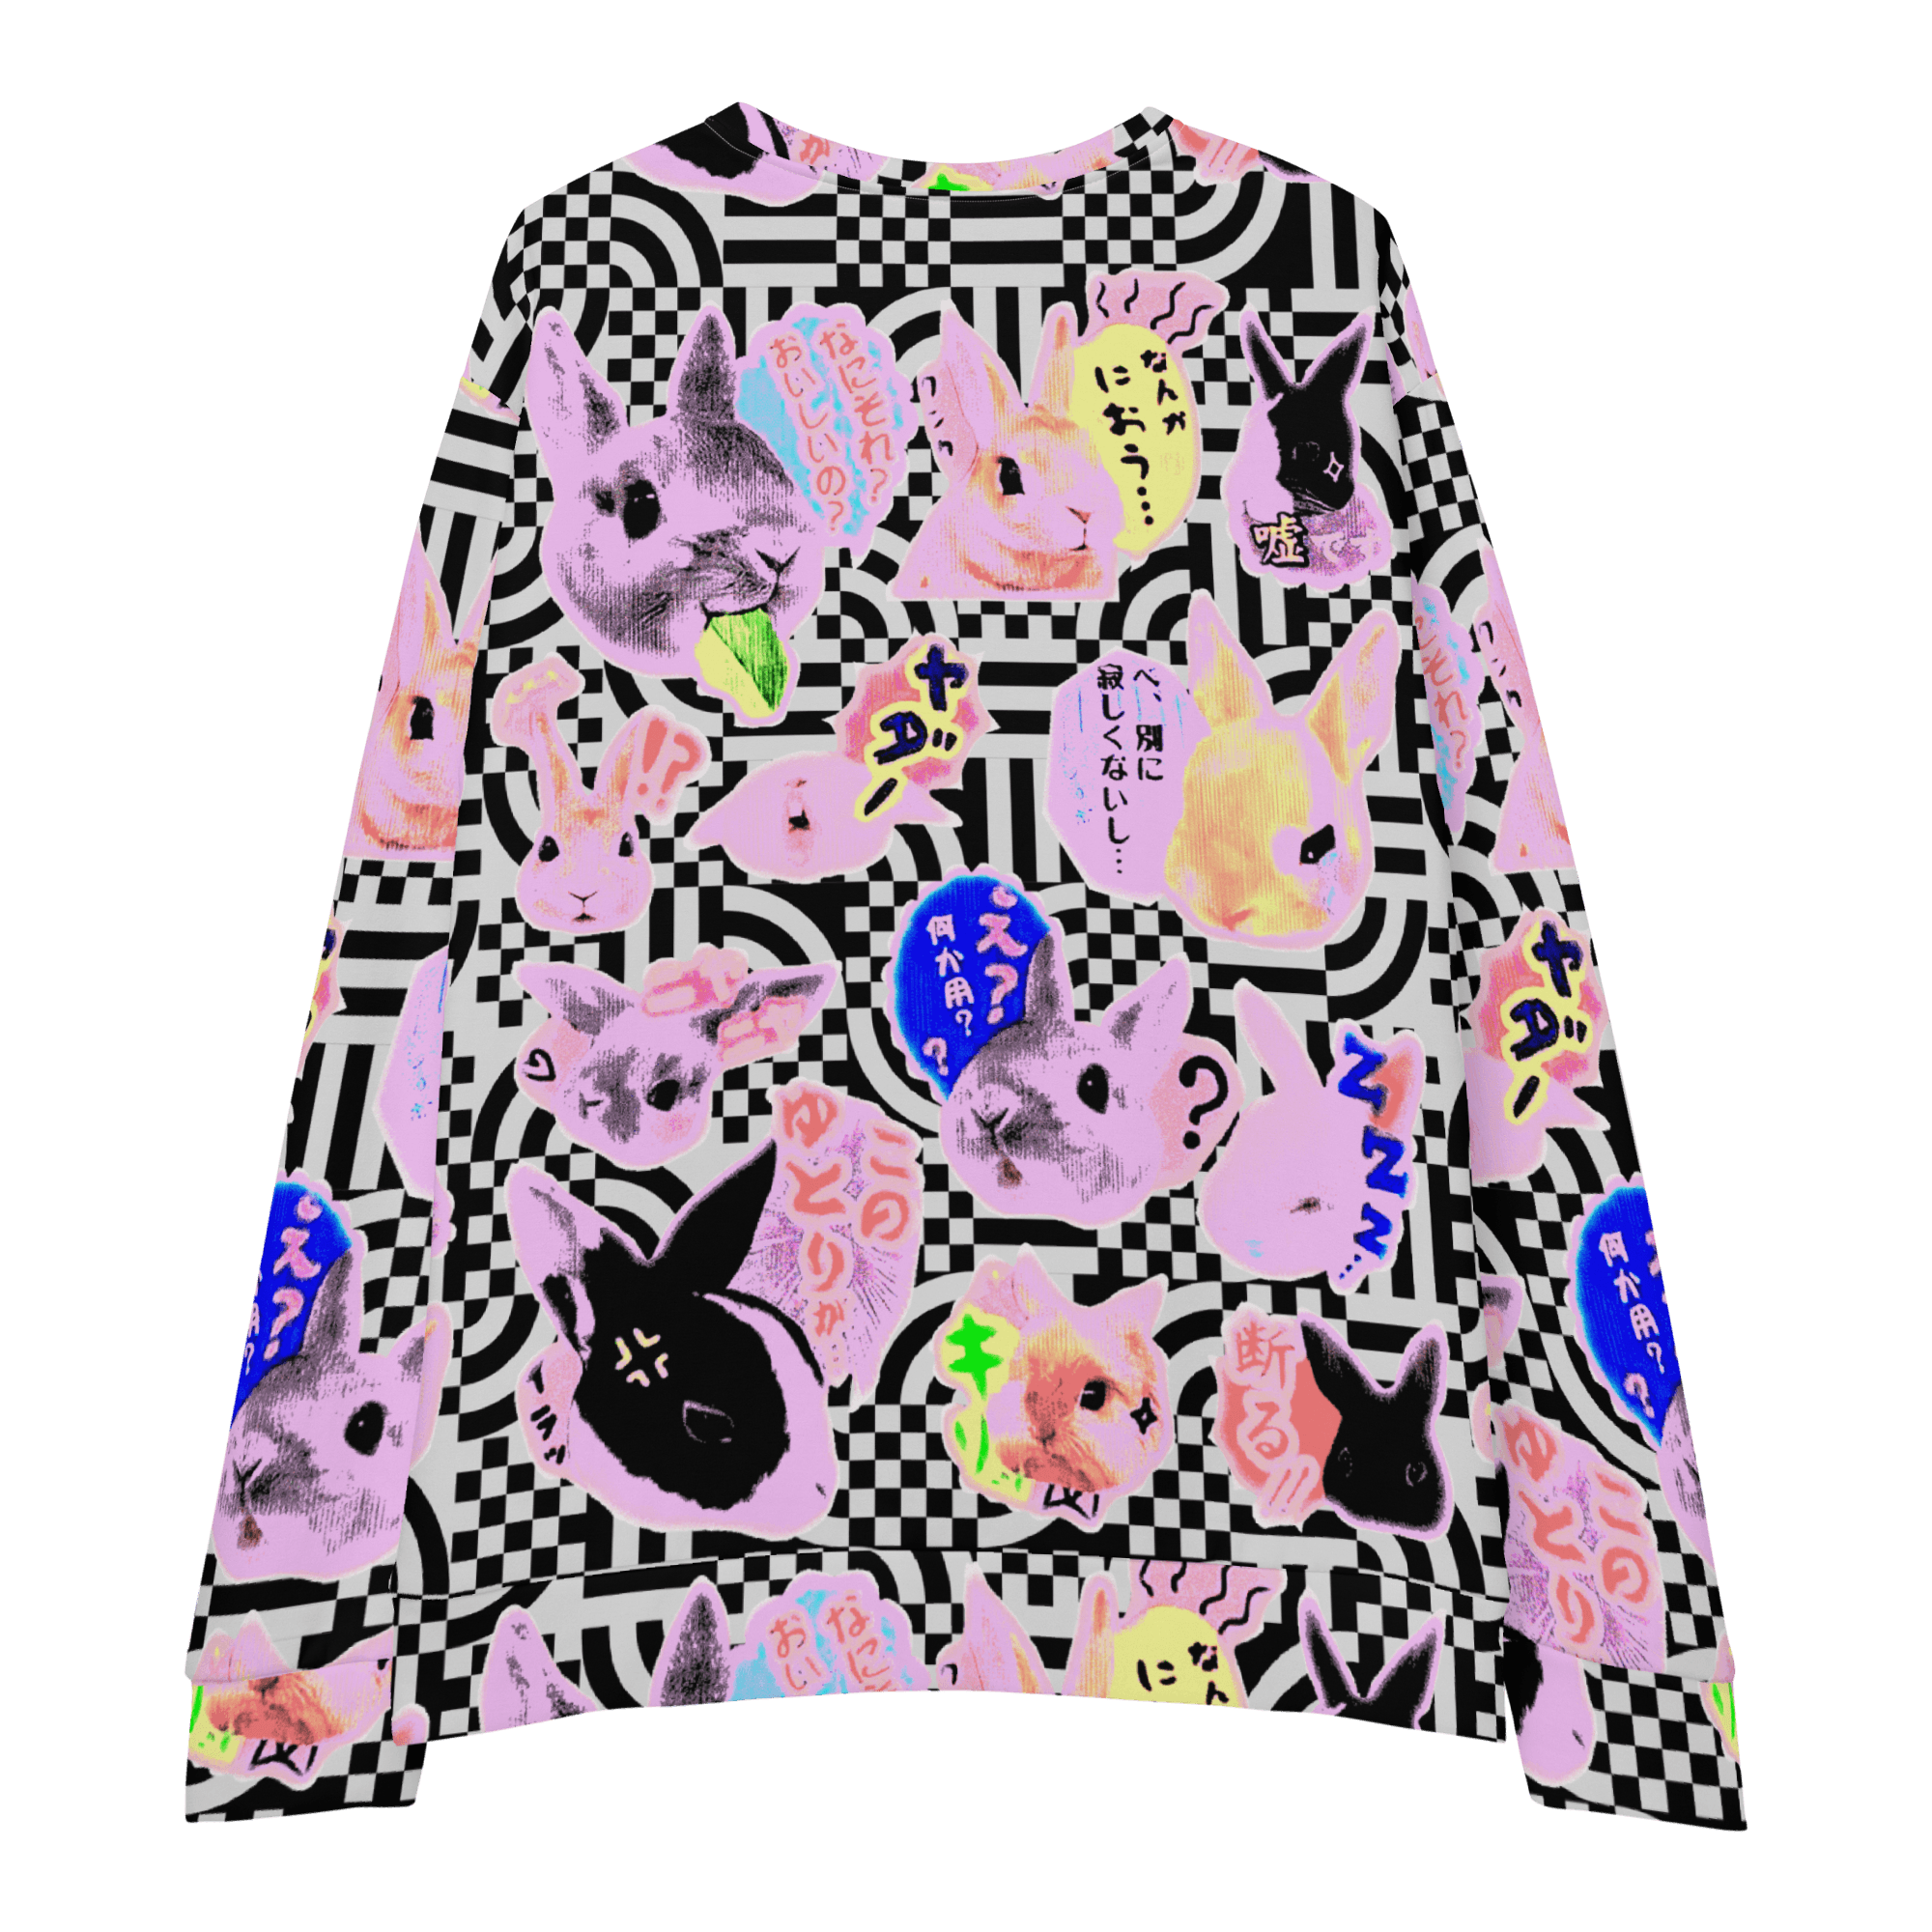 BUN Rave® Unisex Sweatshirt (7 pieces for sale) - Kikillo Club